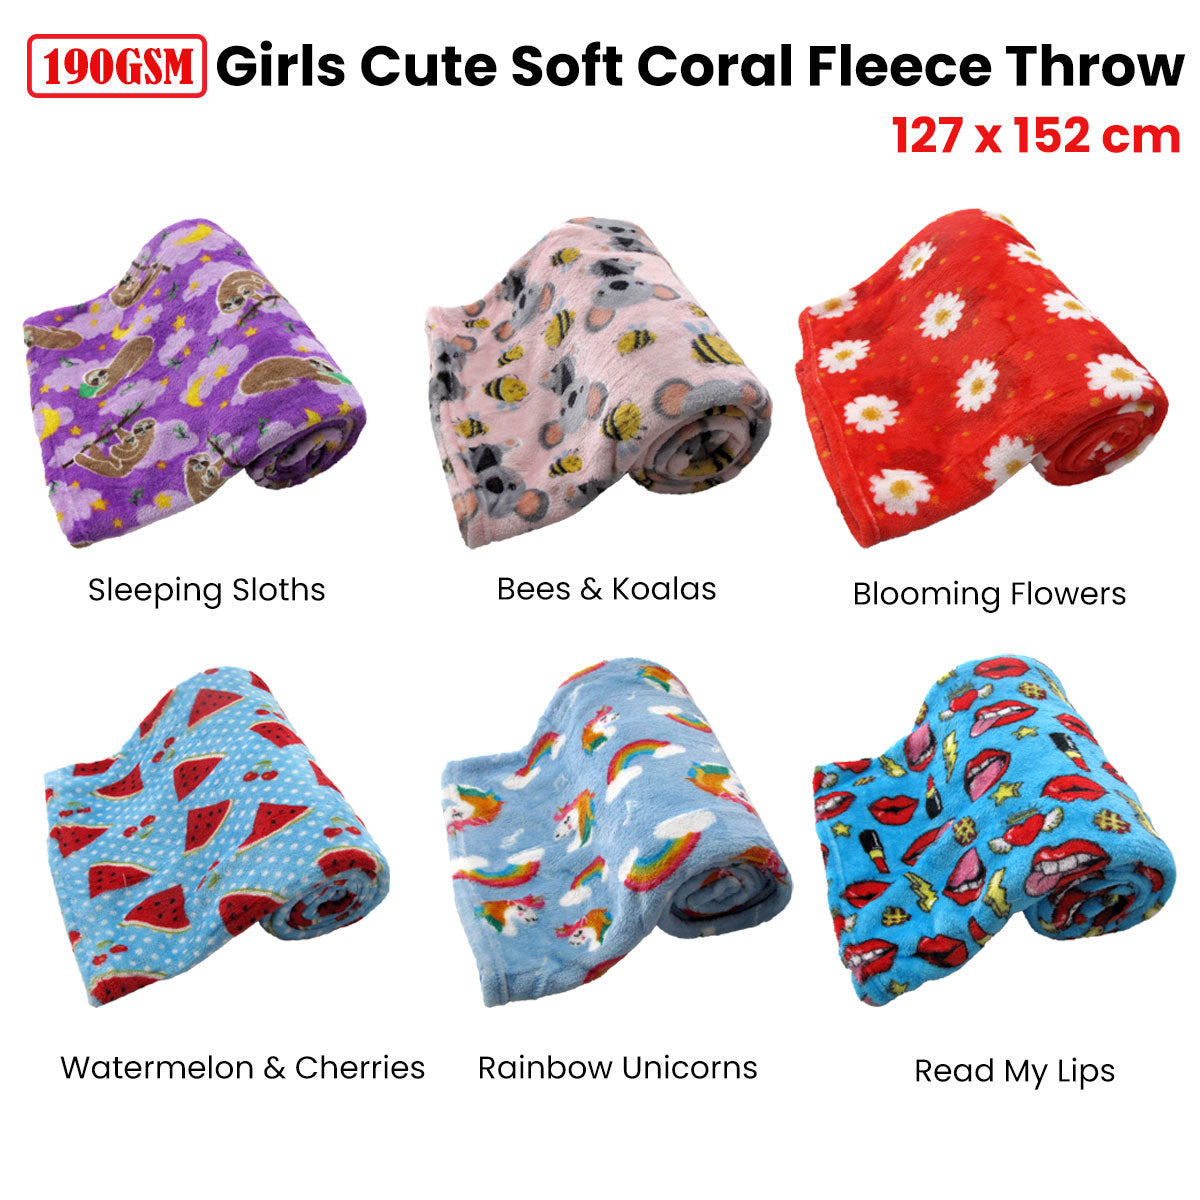 190GSM Girls Cute Ultra Soft Coral Fleece Throw 127 x 152cm Rainbow Unicorns